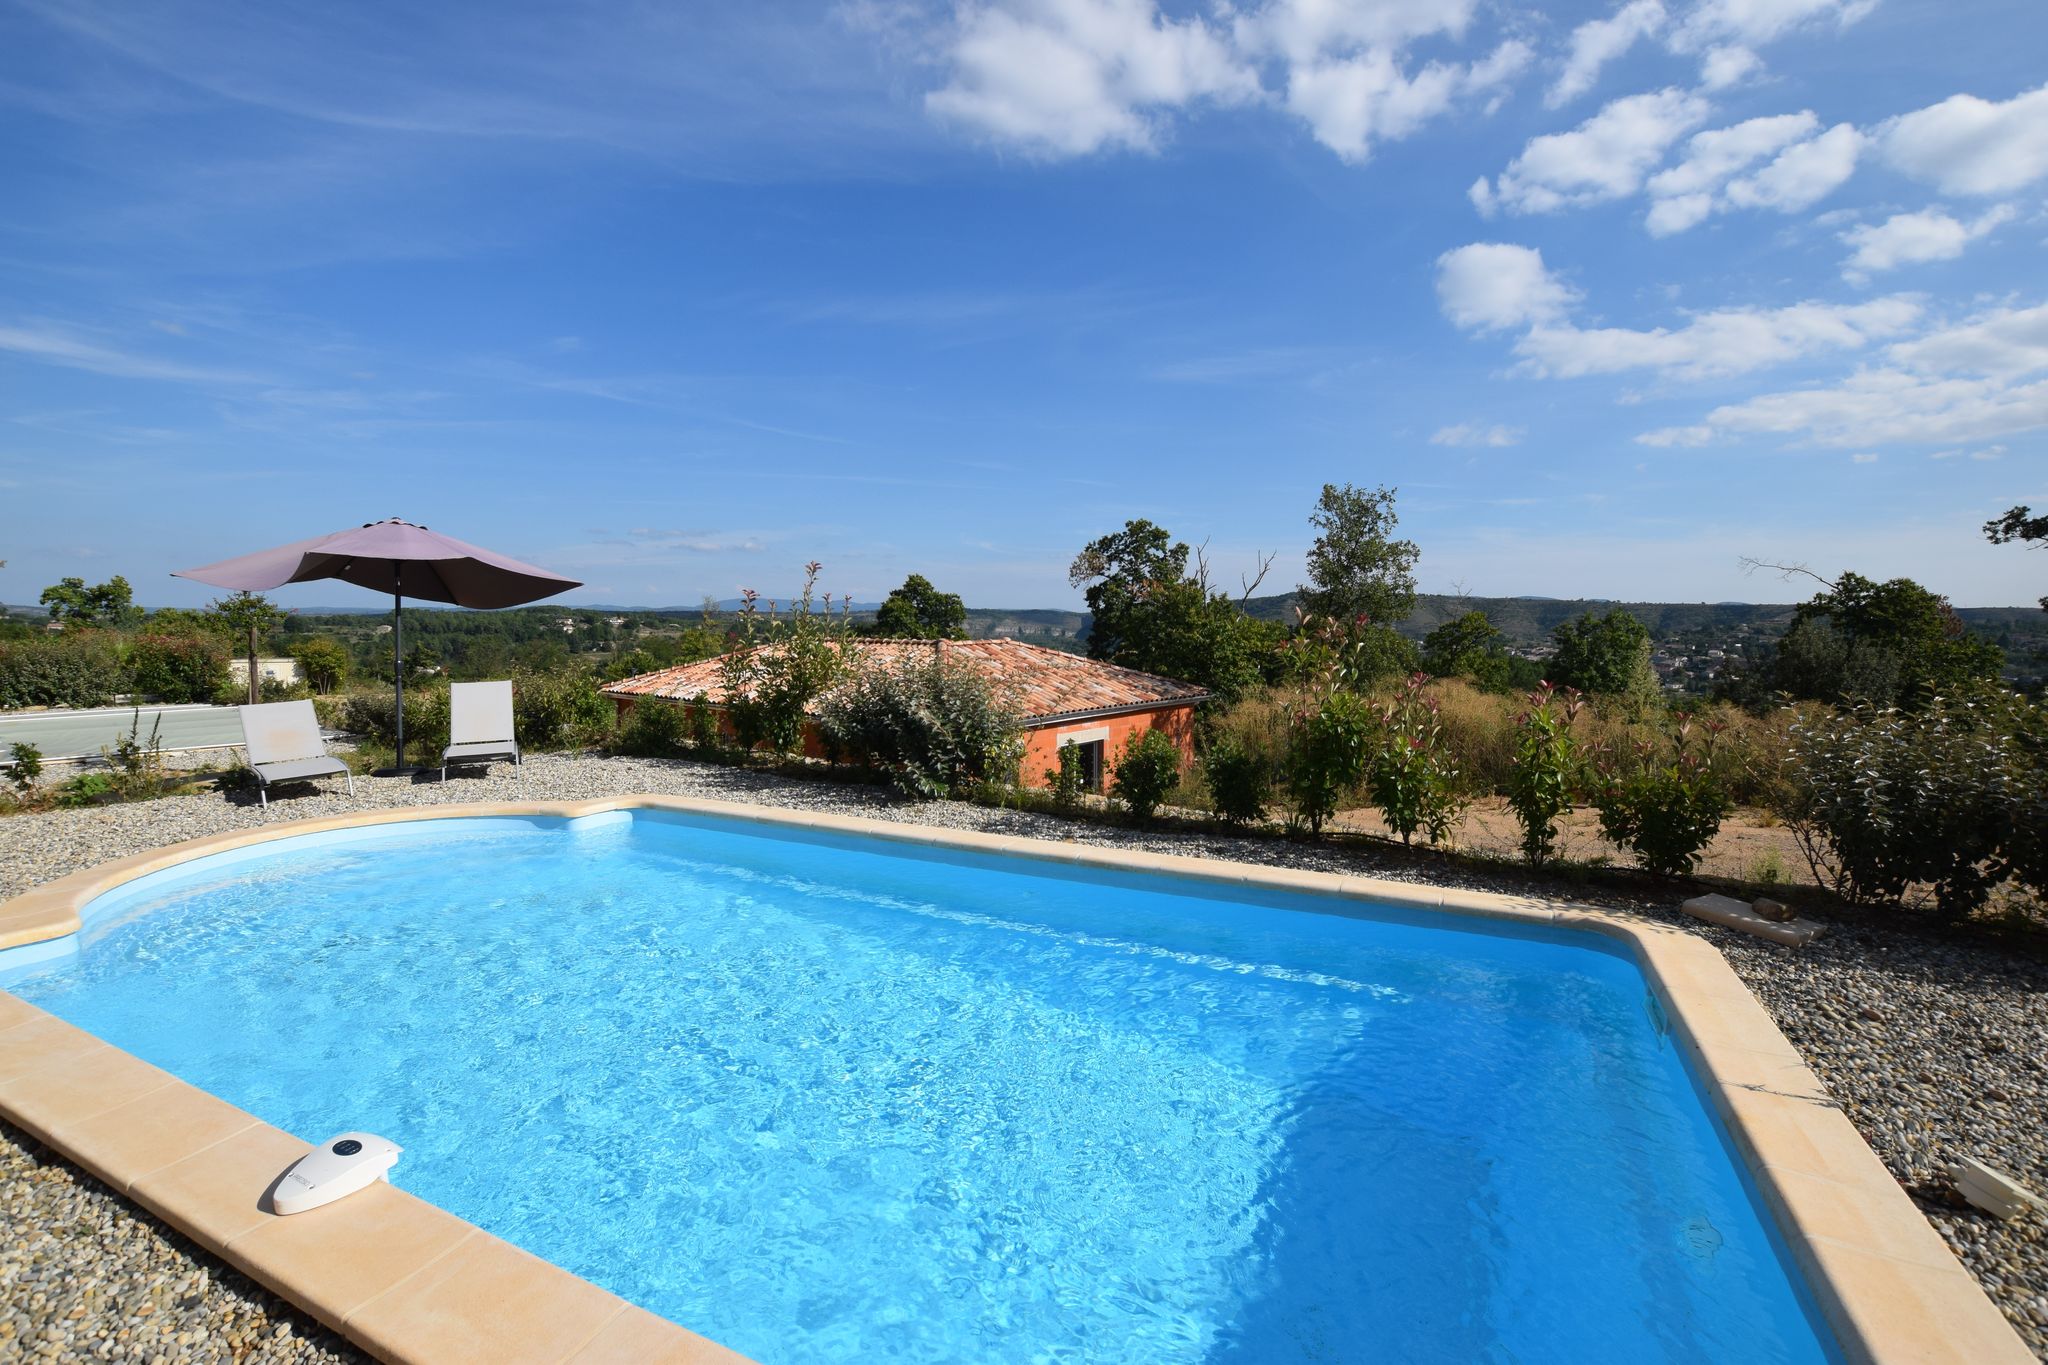 Charmante villa in Joyeuse Frankrijk met privézwembad